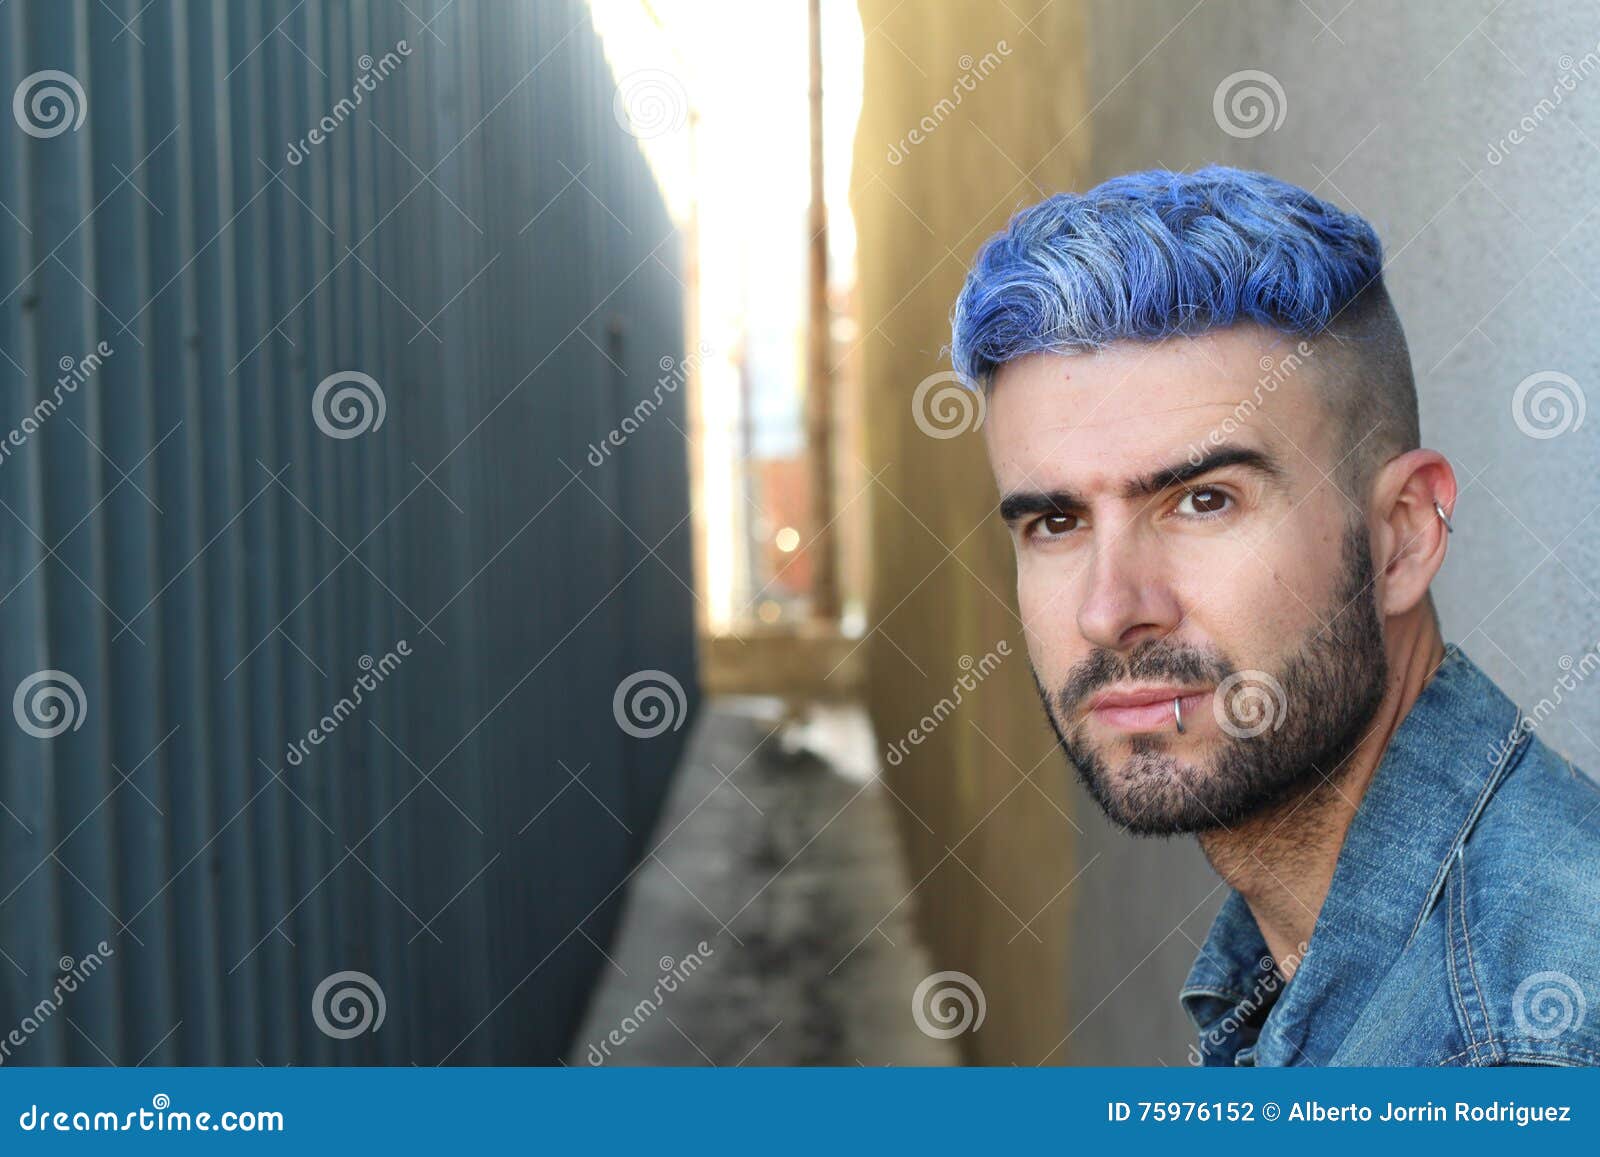 4. "Aqua Blue Hair Dye Options for Men" - wide 4